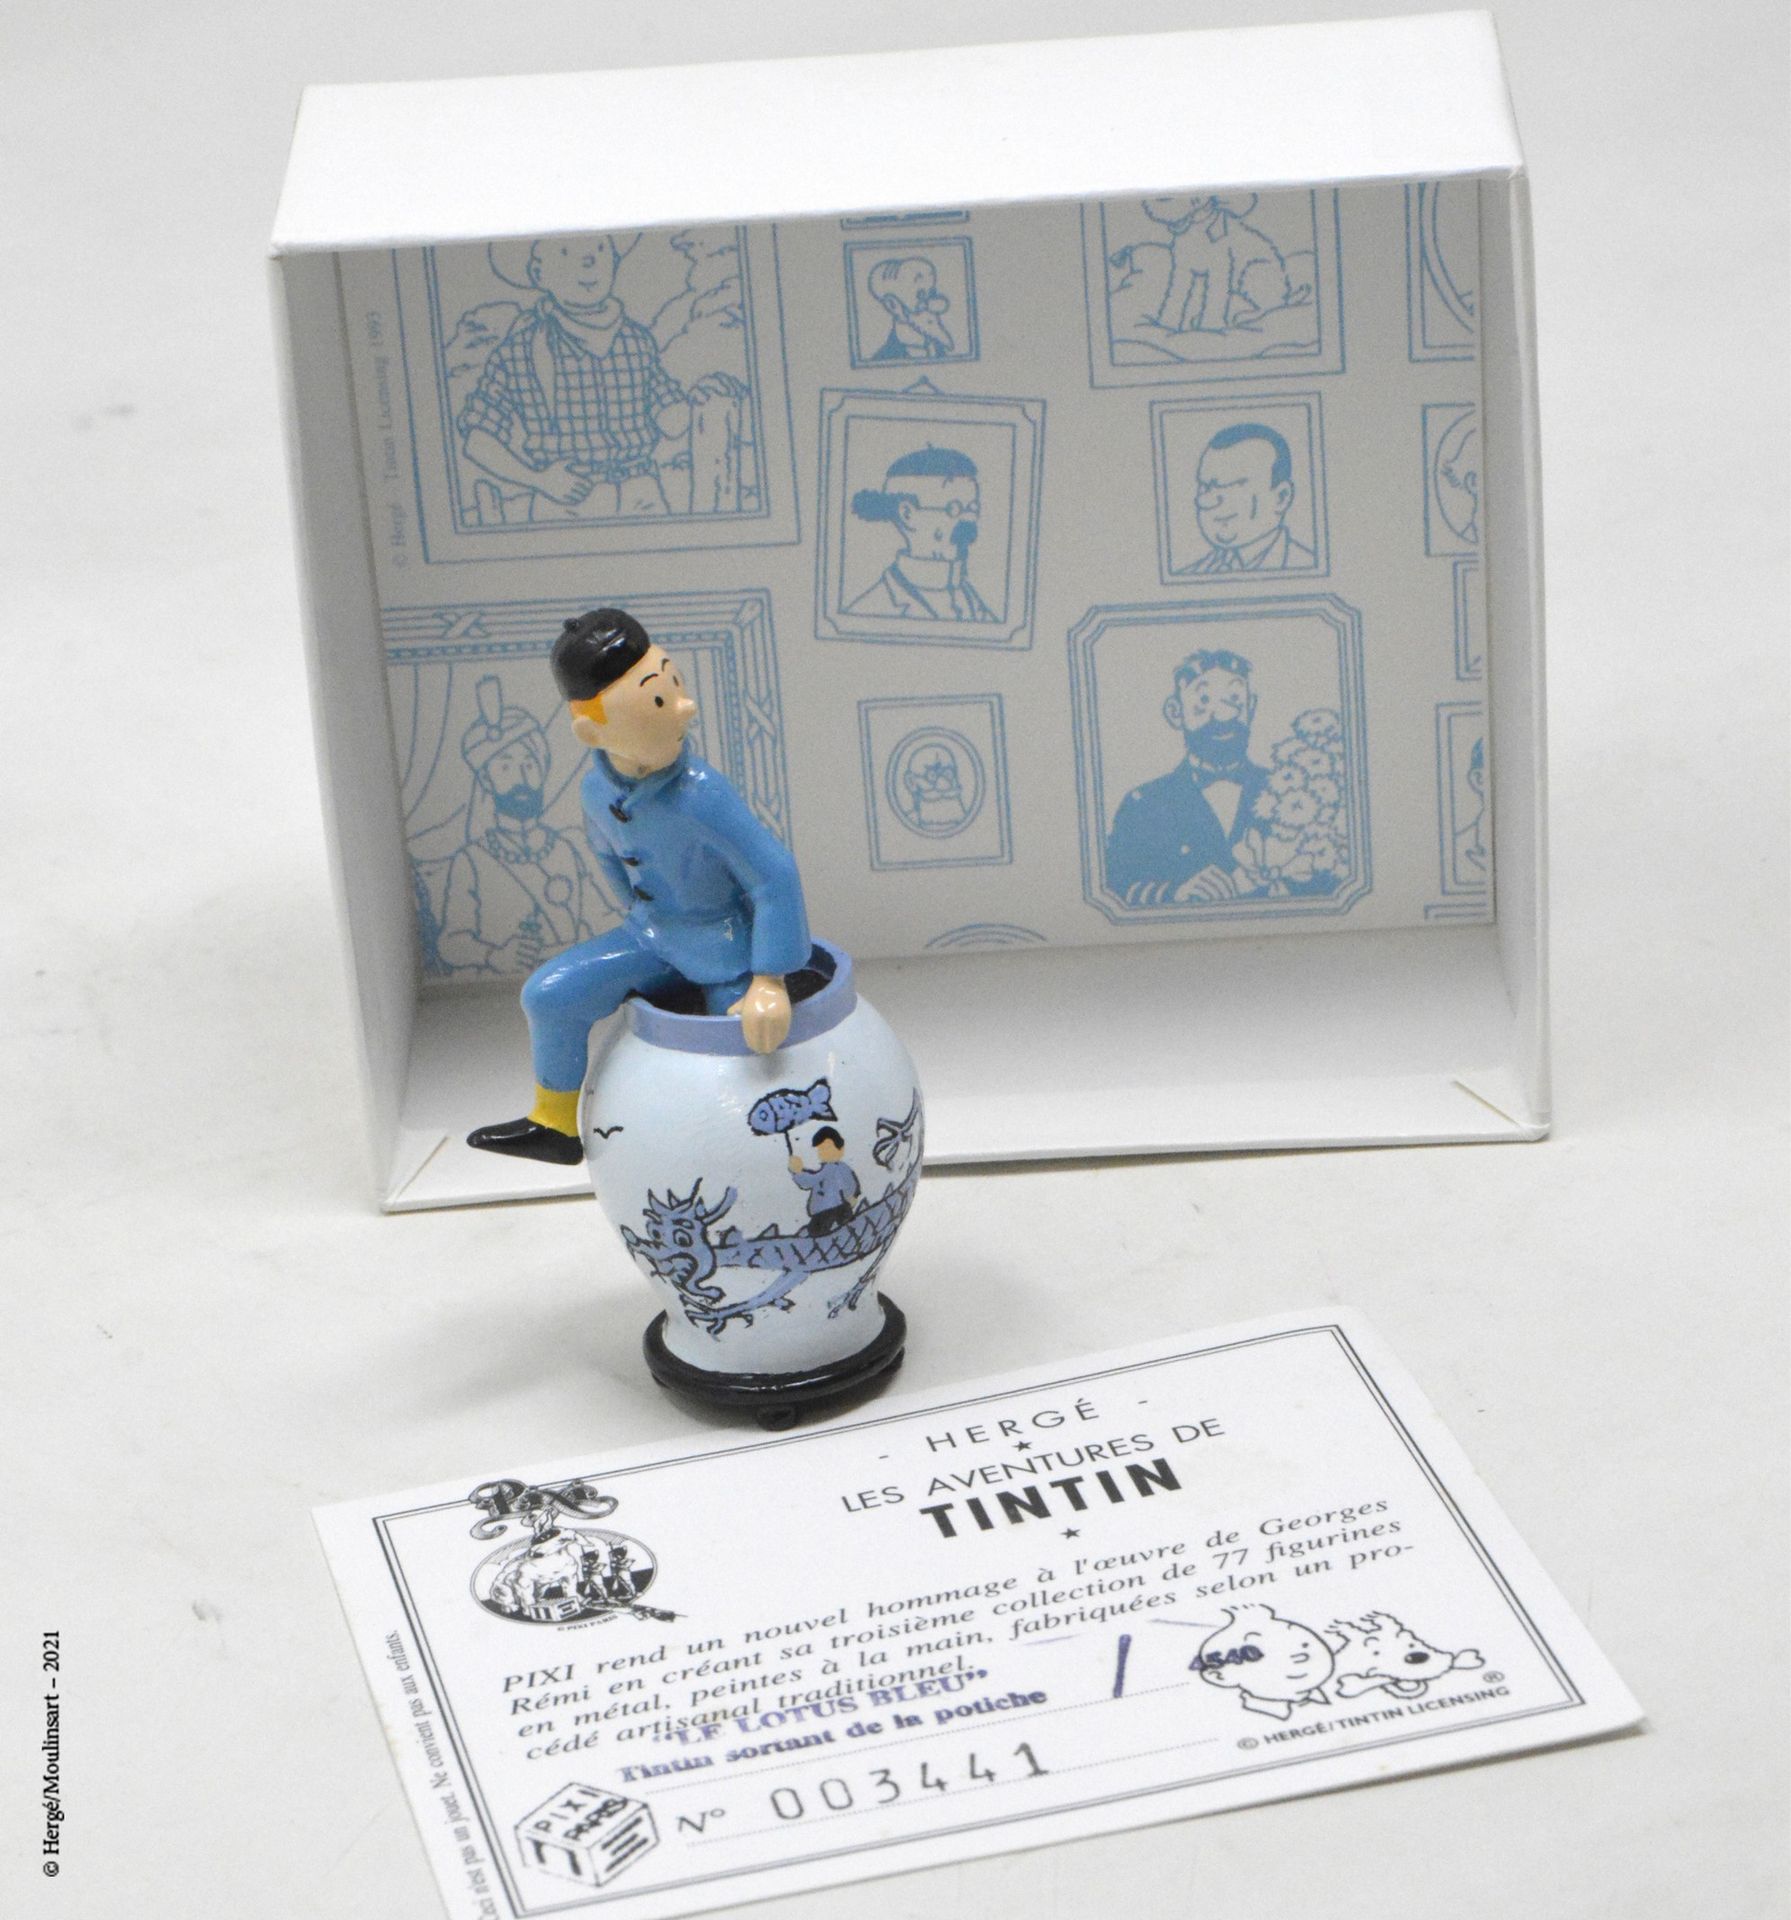 LE LOTUS BLEU HERGÉ/PIXI 

Hergé : Serie Tintín n°3

El loto azul: Tintín salien&hellip;